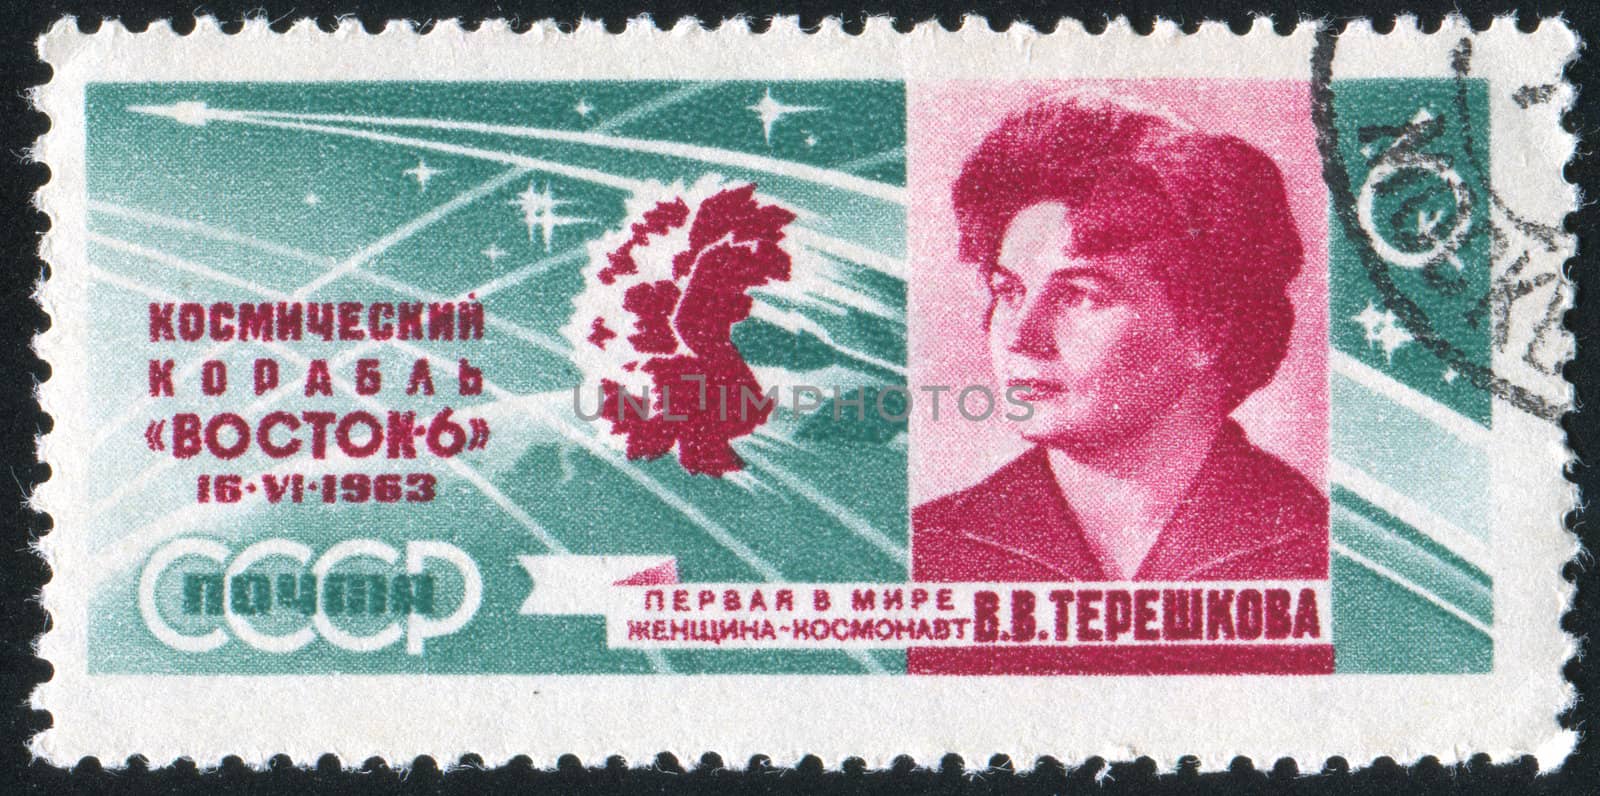 RUSSIA - CIRCA 1963: stamp printed by Russia, shows Valentina Tereshkova, circa 1963